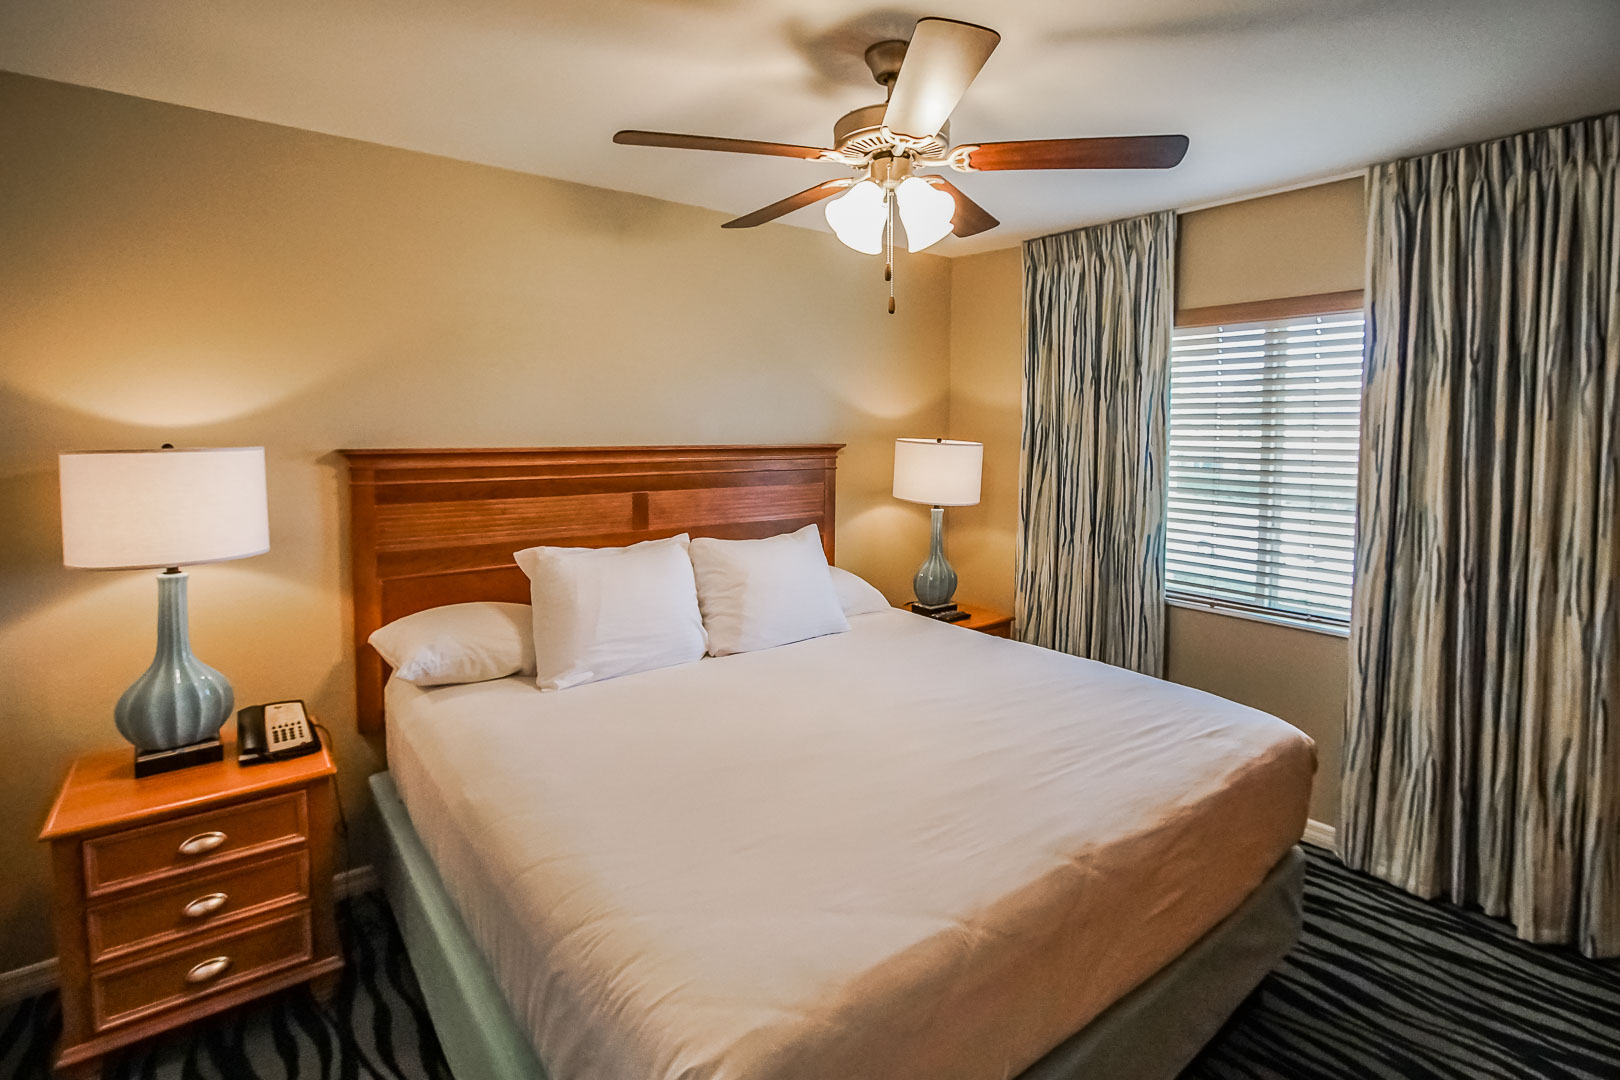 A cozy master bedroom at VRI's Fantasy World Resort in Florida.